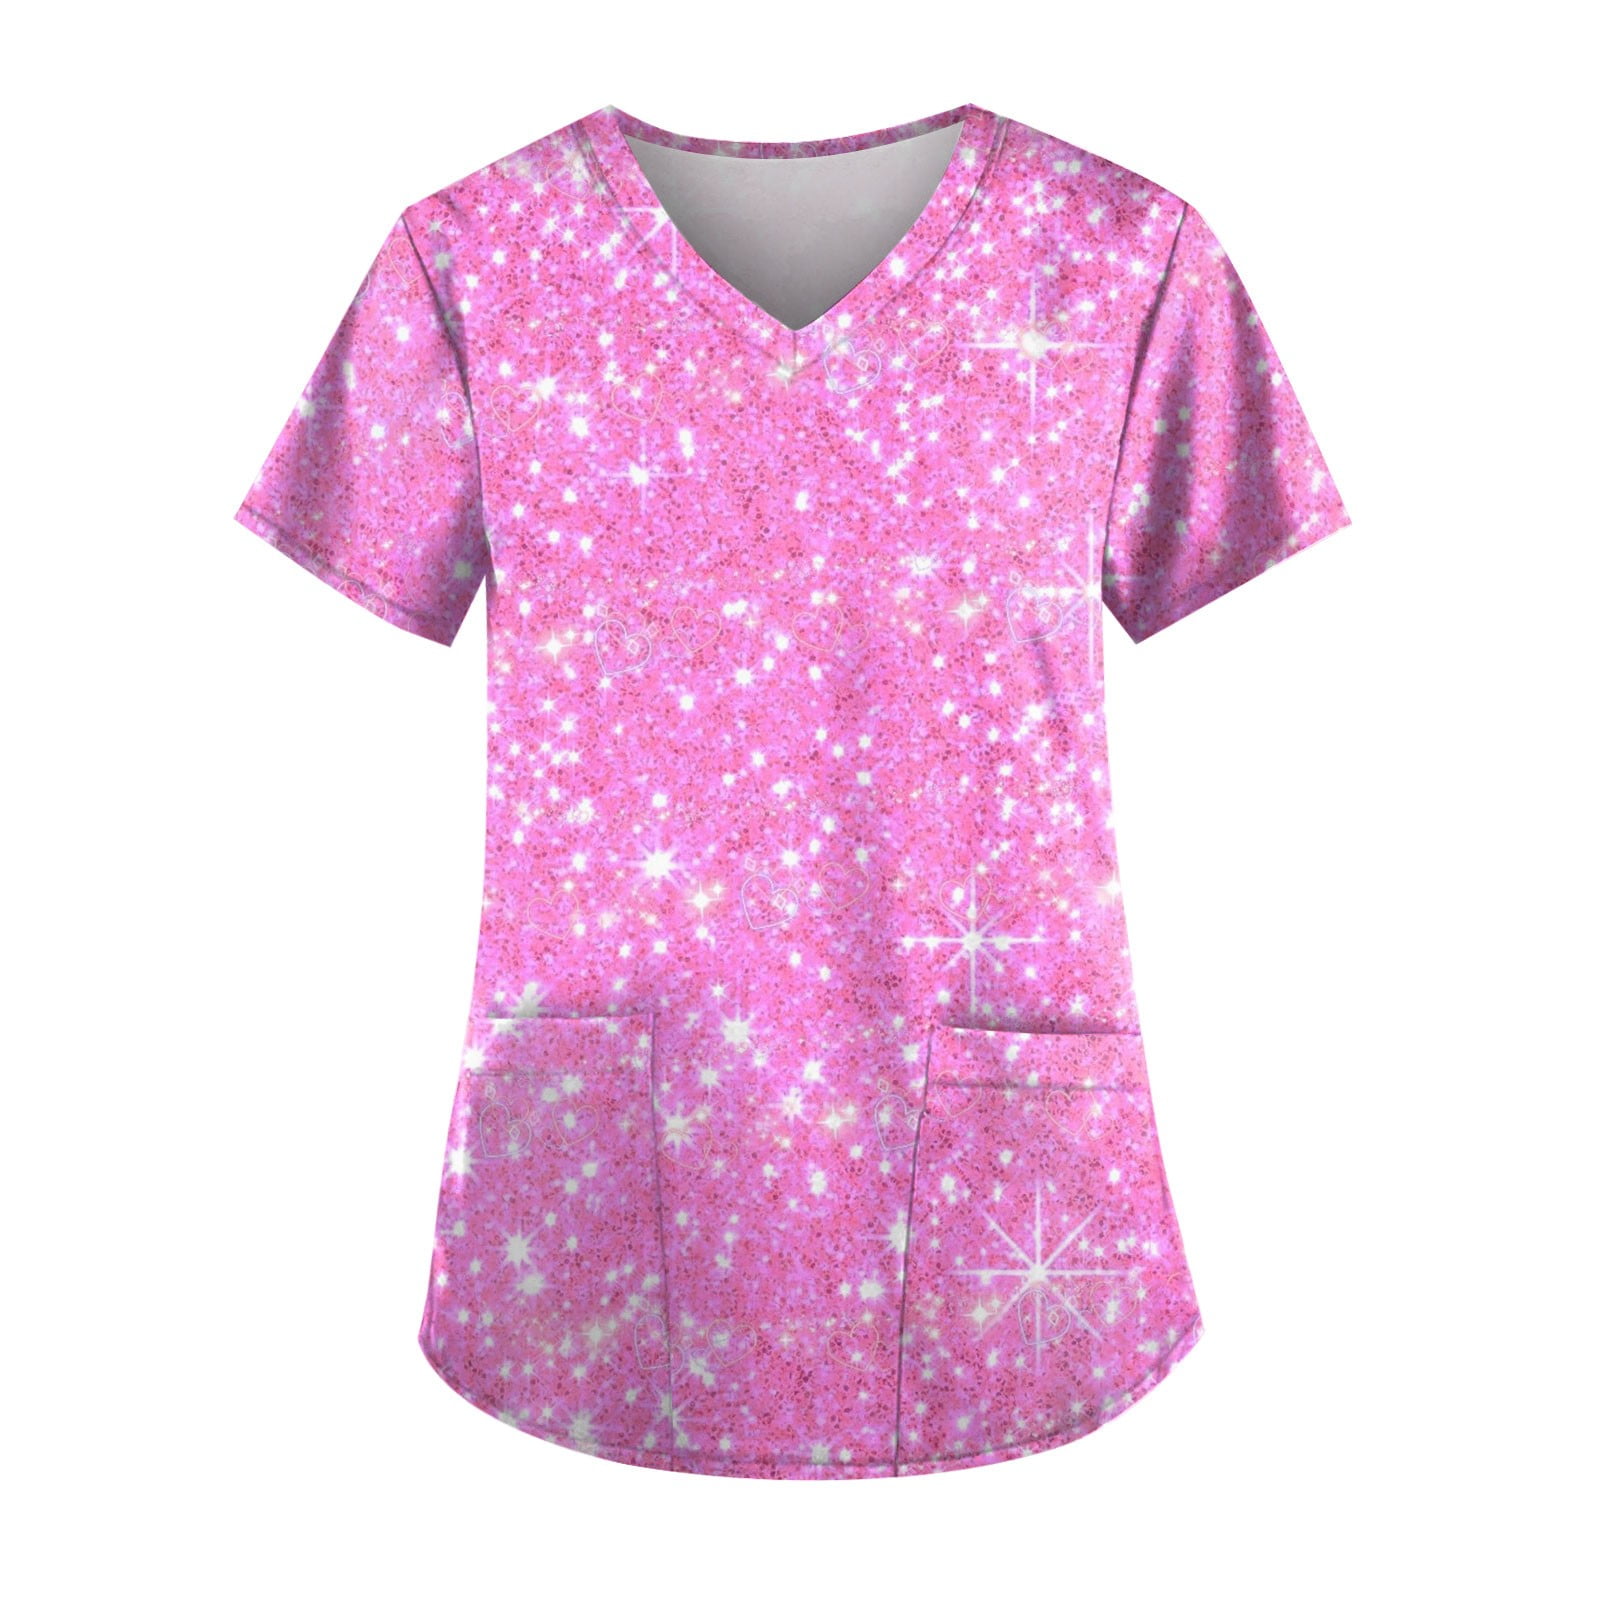 Ydkzymd Womens Plus Size Scrubs Hot Pink Print Long Sleeve Scrub Tops ...